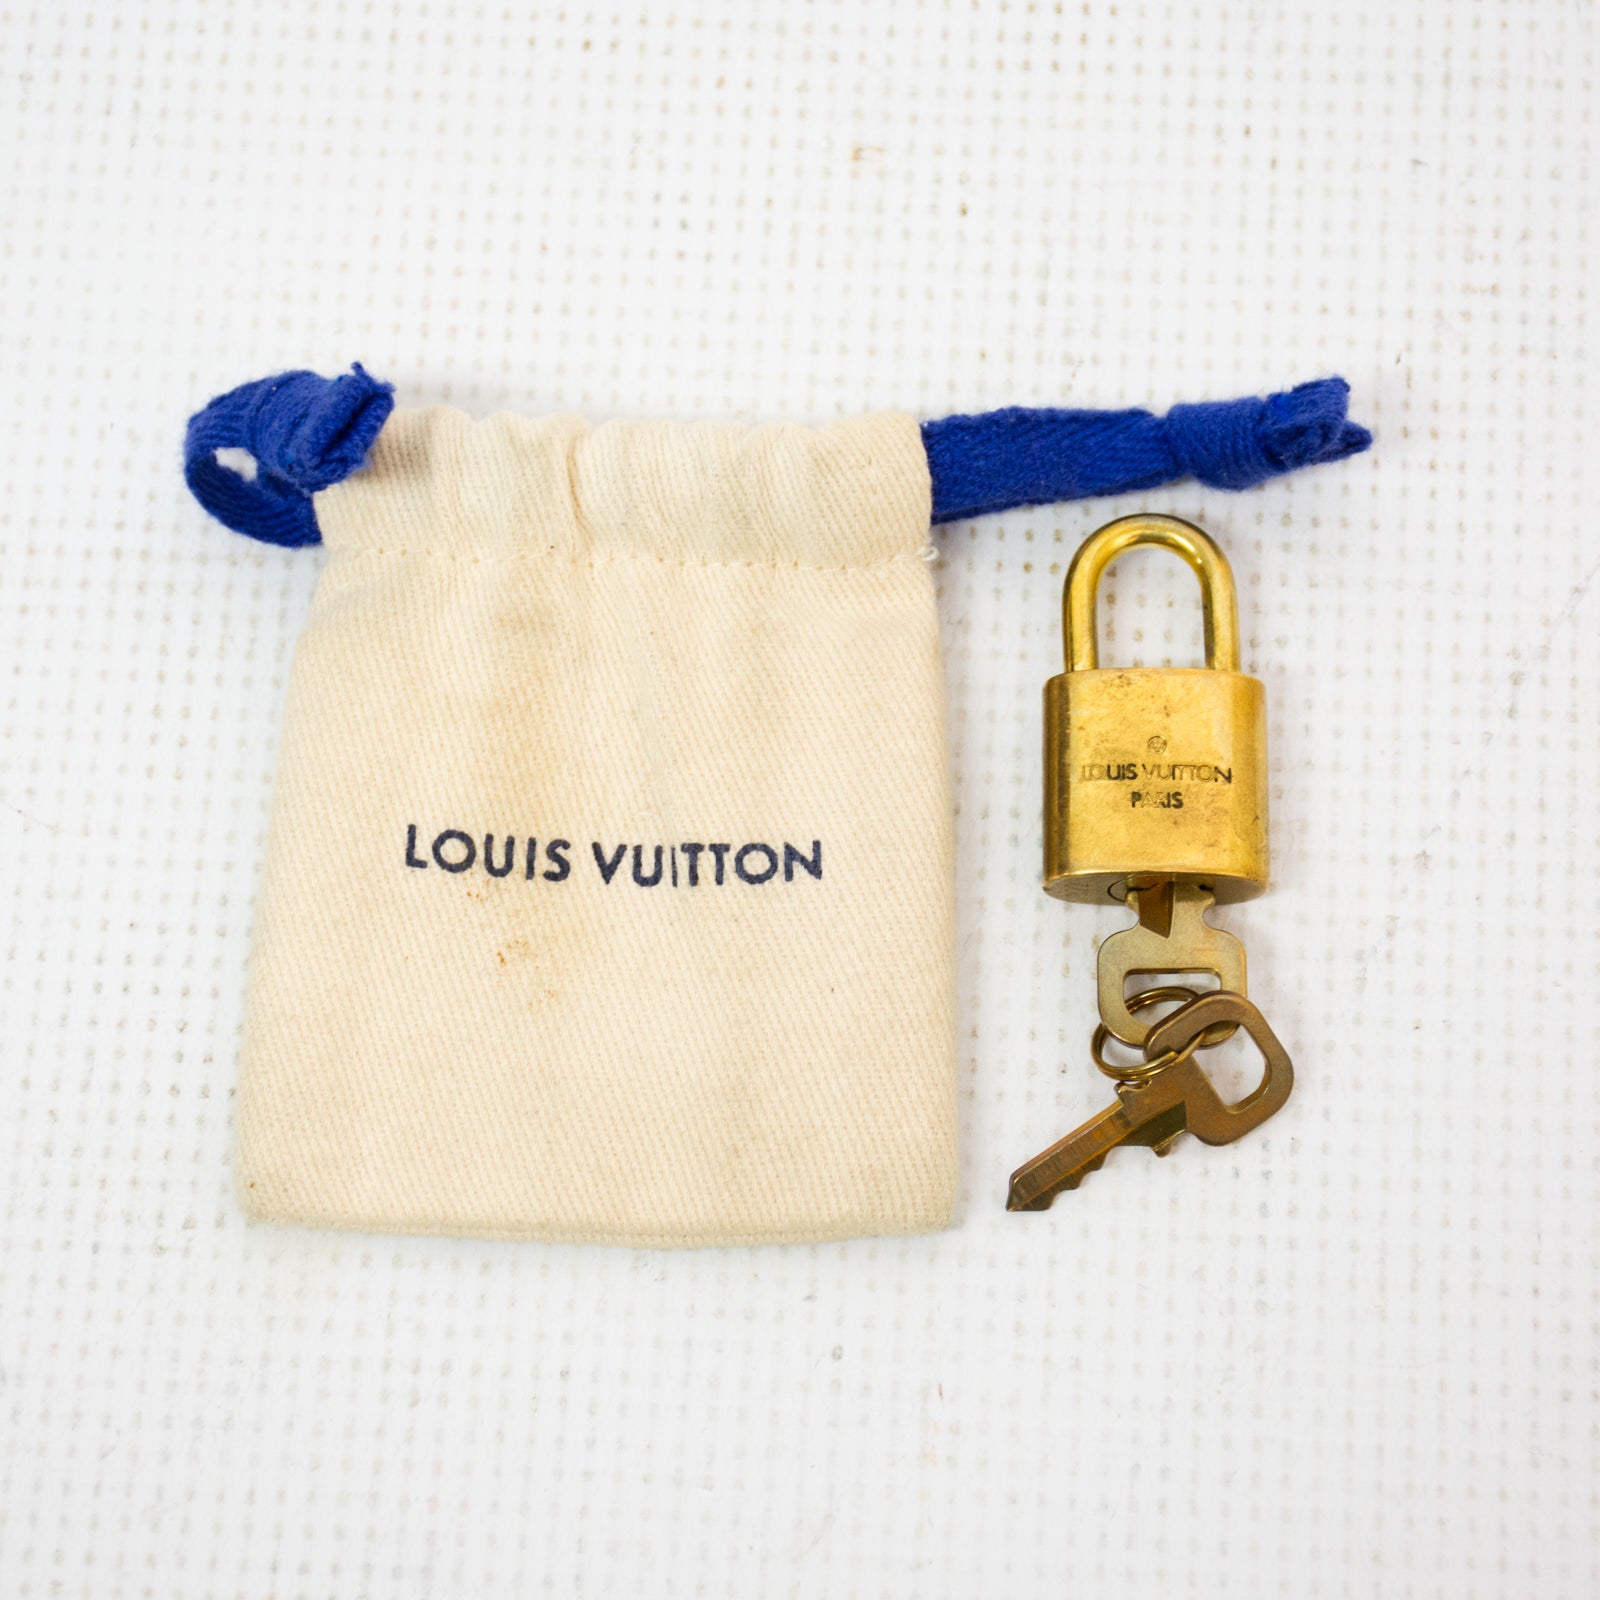 Louis Vuitton Monogram Speedy 30 With Lock And Key